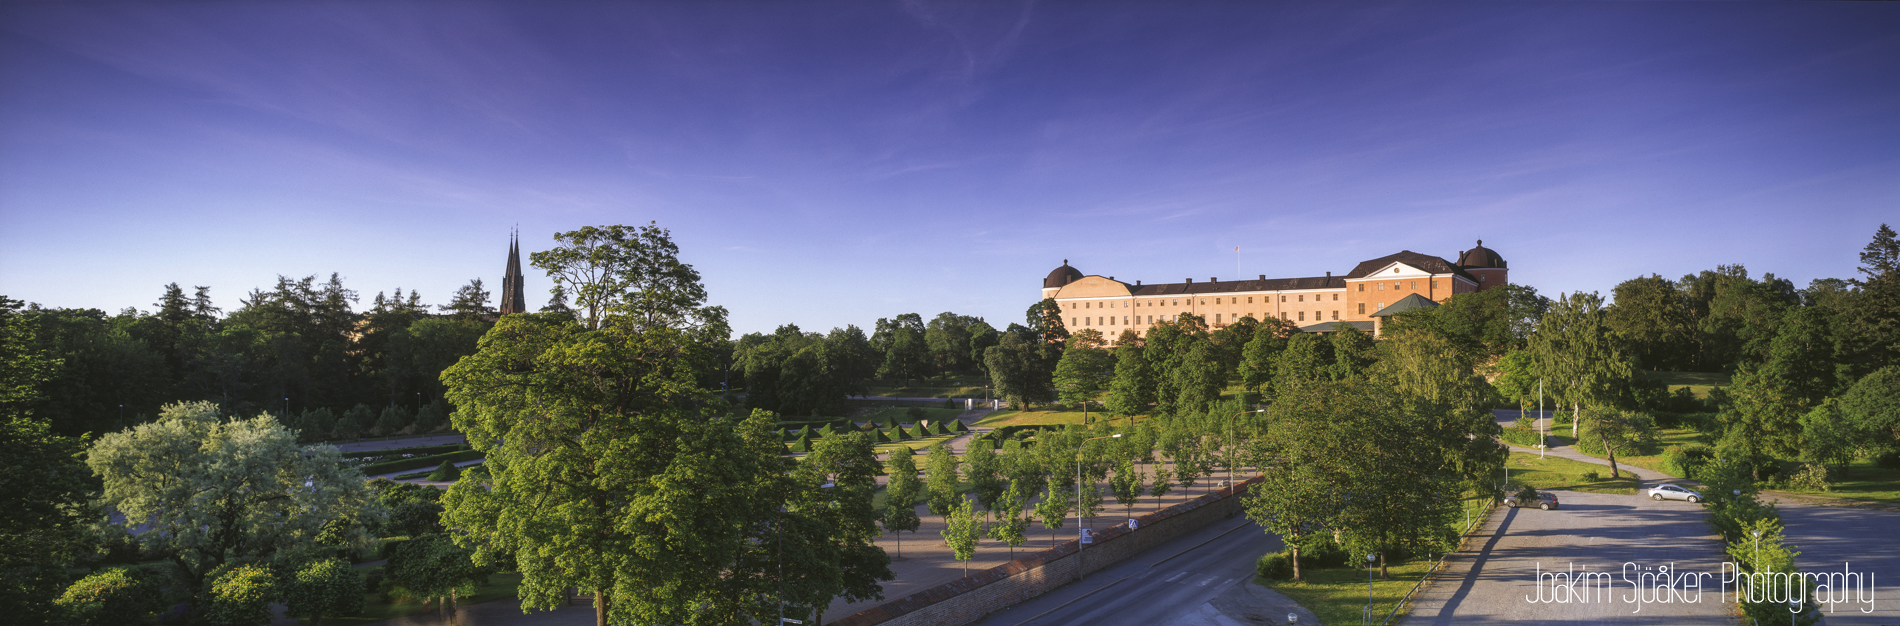 Joakim Sjöåker Photography uppsala castle botanical garden panorama 6x17 velvia